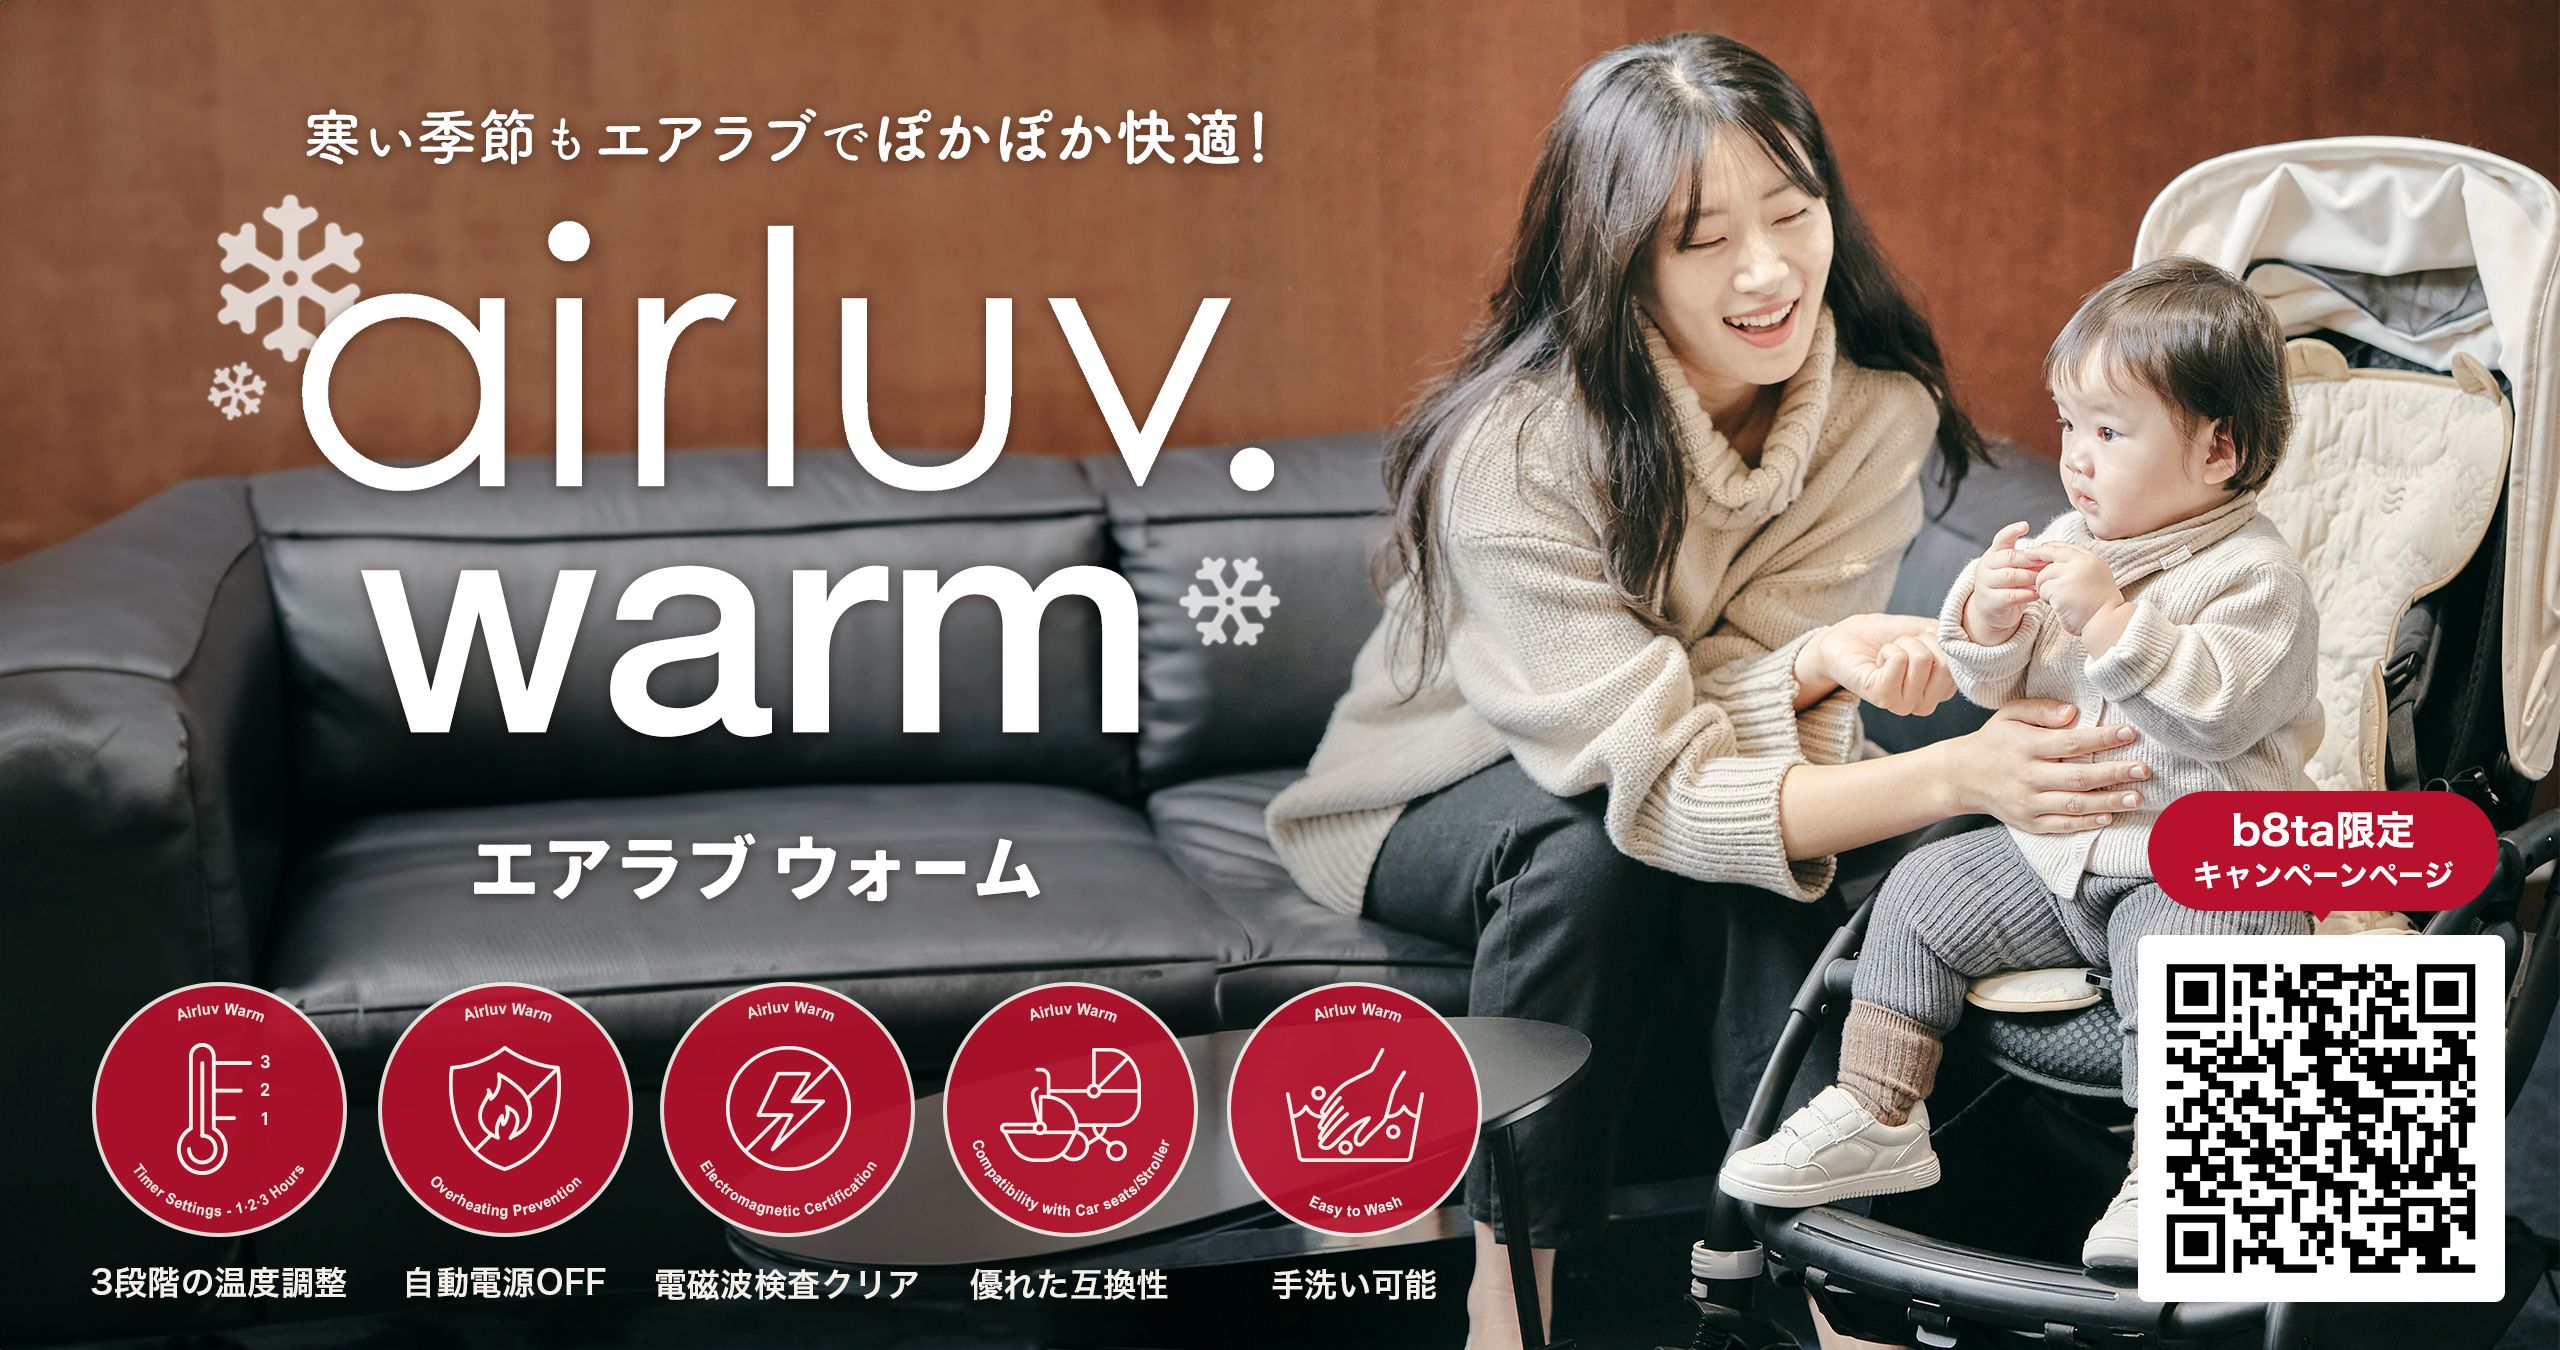 airluv. warm2 - b8ta Japan